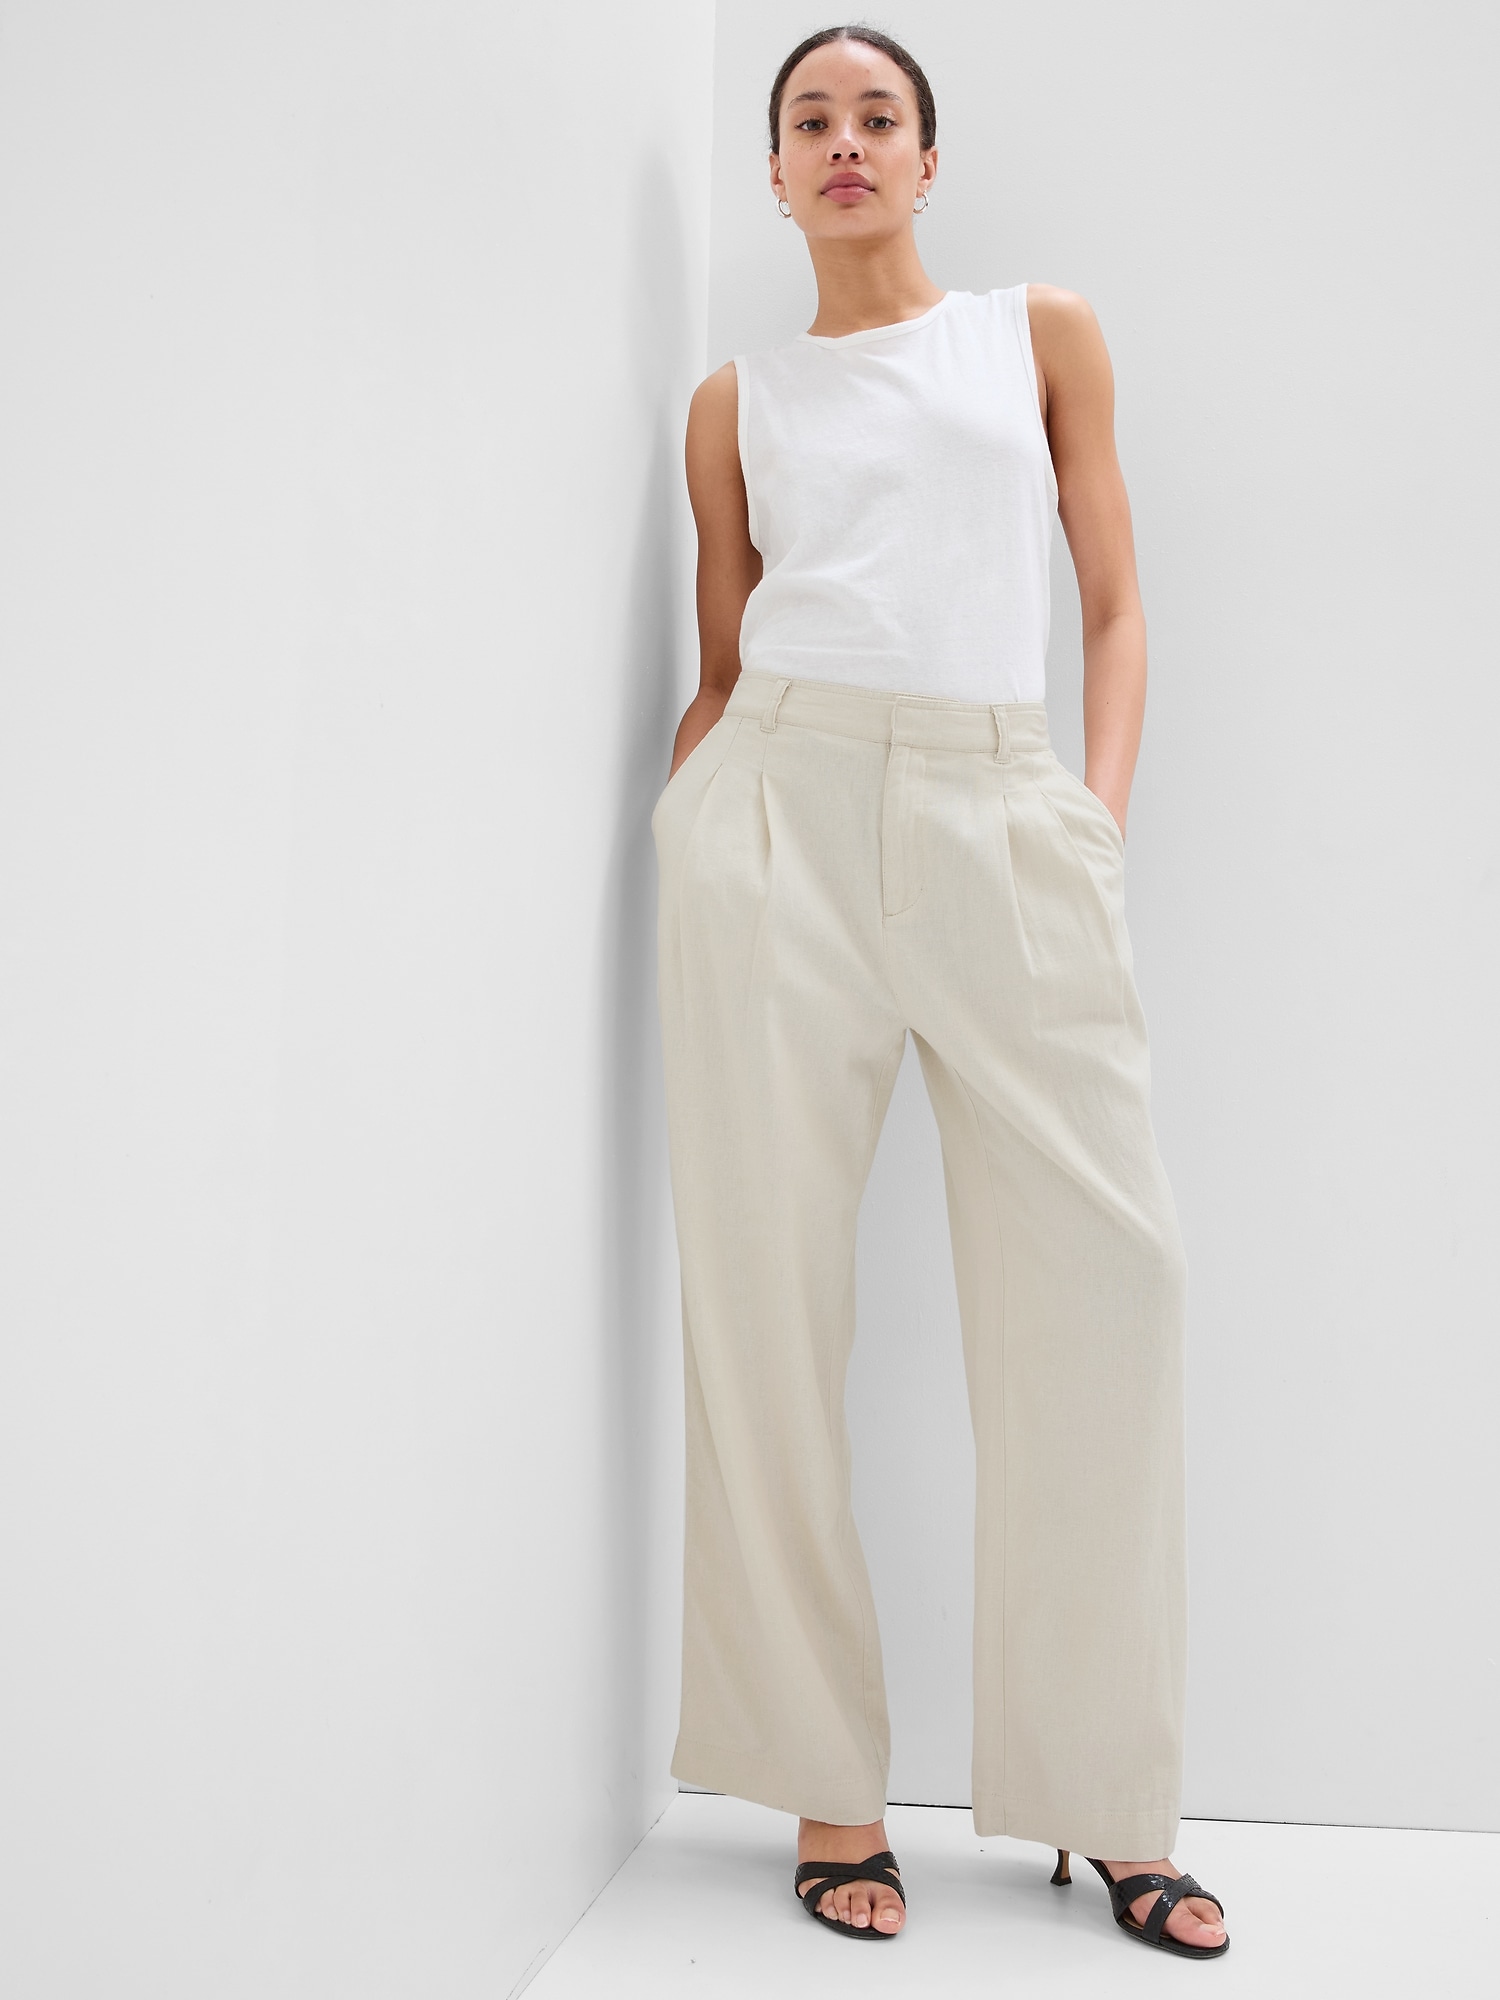 Linen Print Easy Pants | Gap Factory